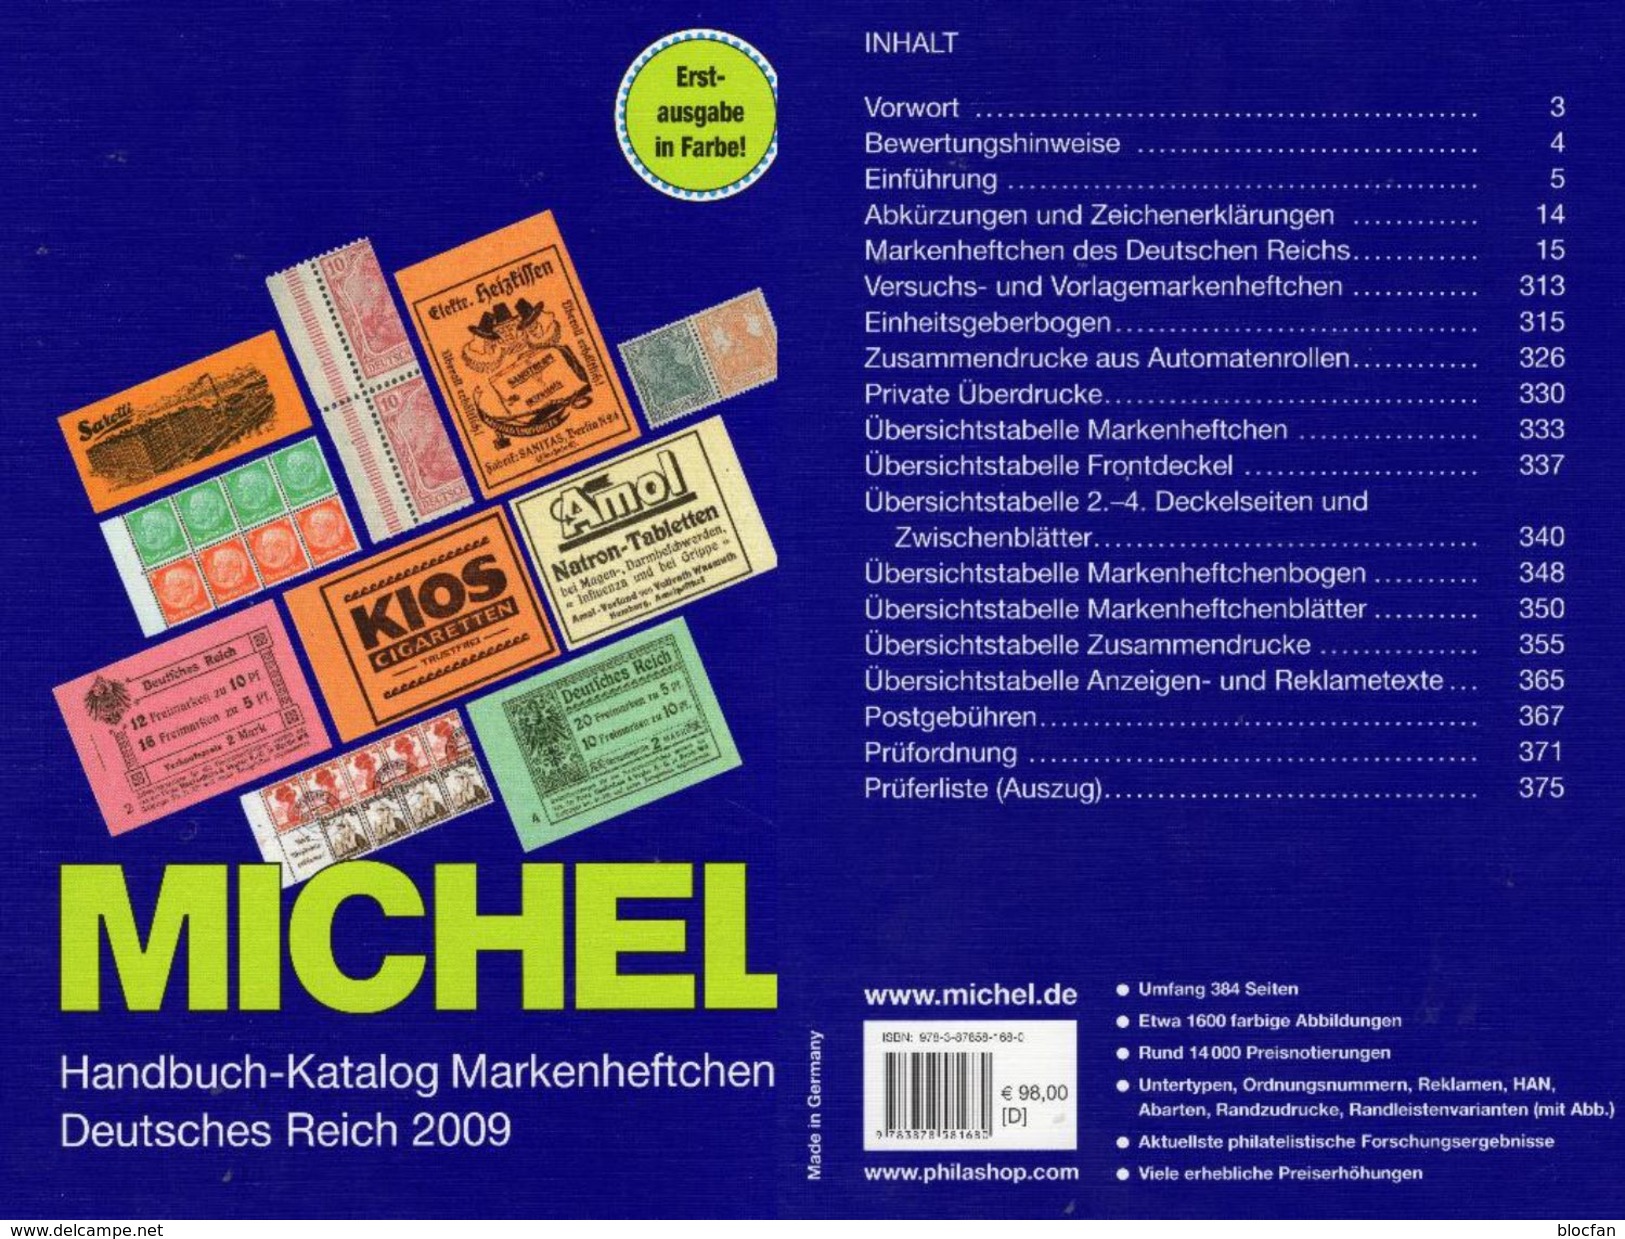 Deutsche Reich Markenheft MlCHEL Handbuch 2009 New 98€ Handbook With Special Carnets Booklets Catalogue Old Germany - Philately